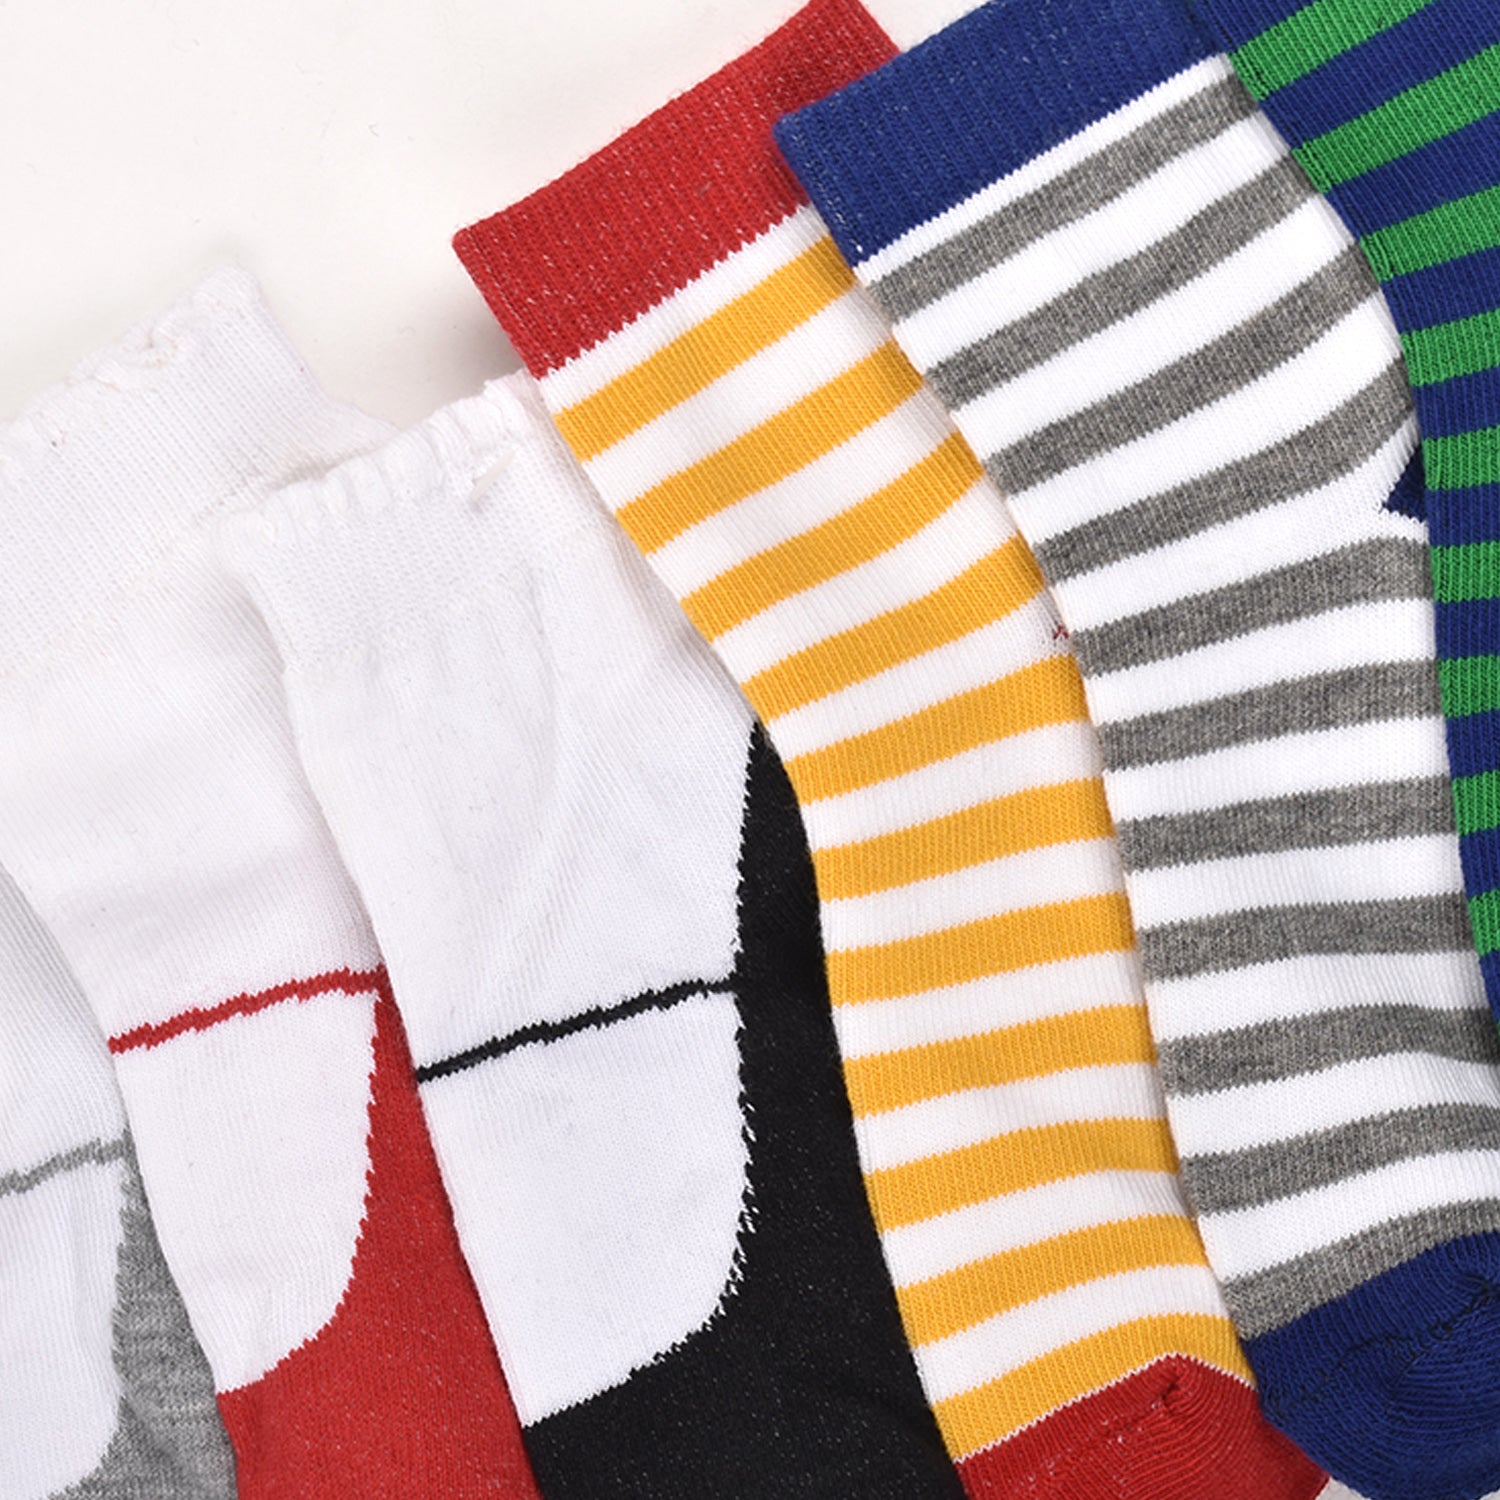 Footprints Super Soft Organic Cotton Kids Socks |Fold & Colorfull Stripes|12-24 Months| Pack of 6